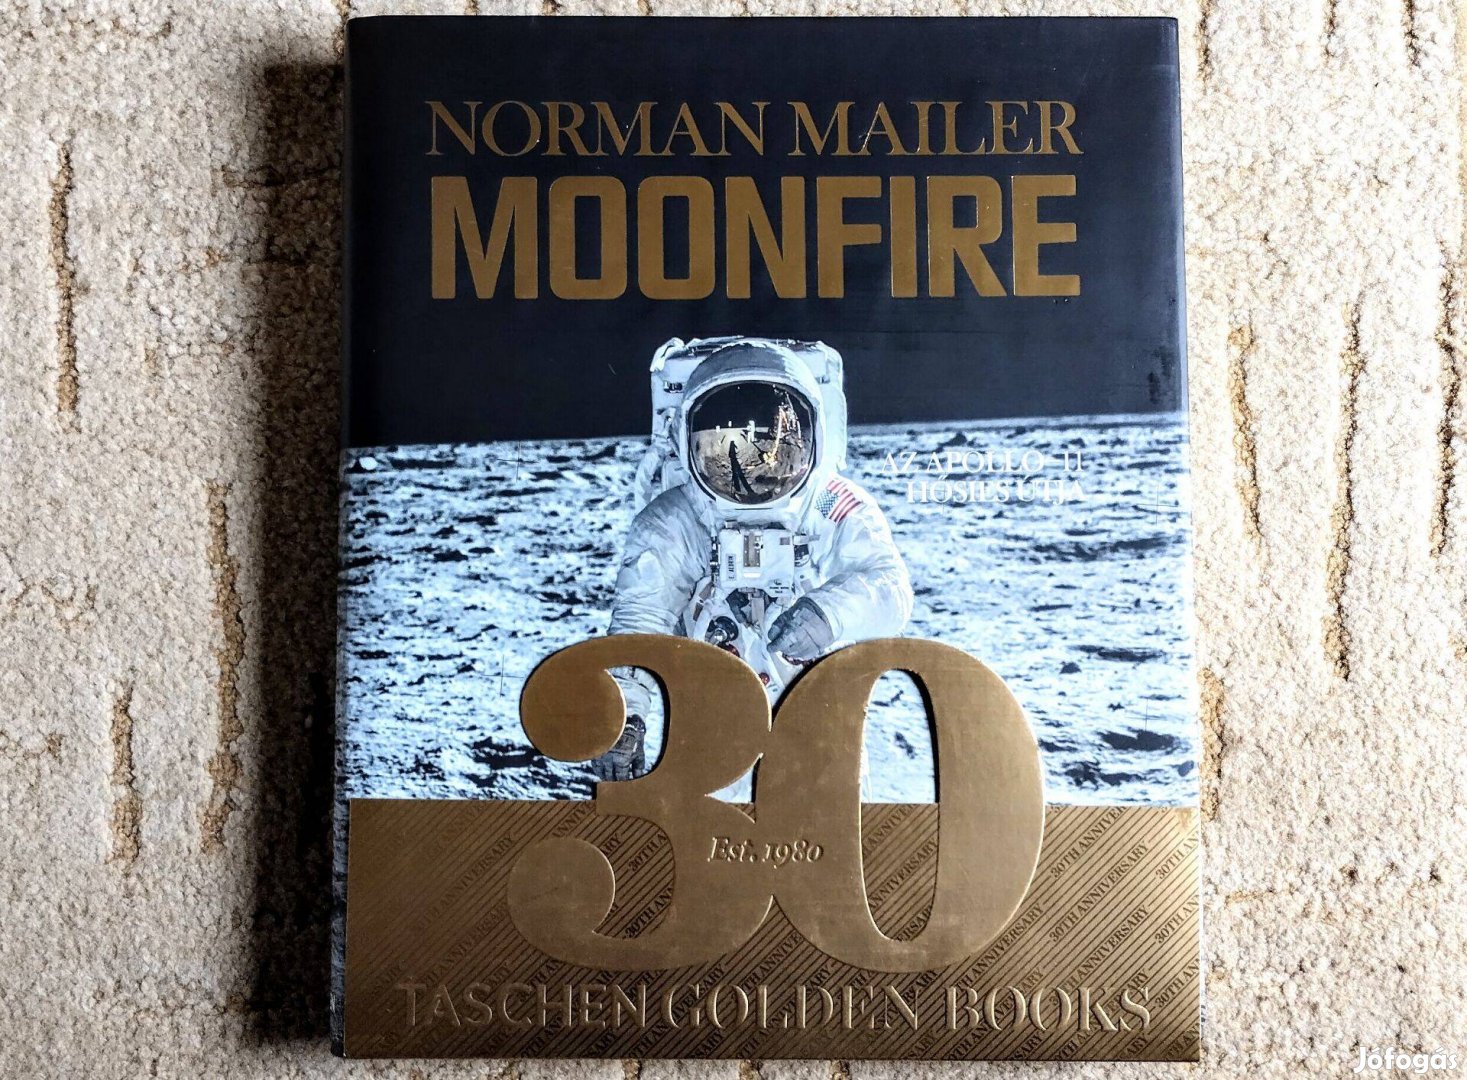 Moonfire - Norman Mailer - Az Apollo-11 hősies útja - Taschen, magyar